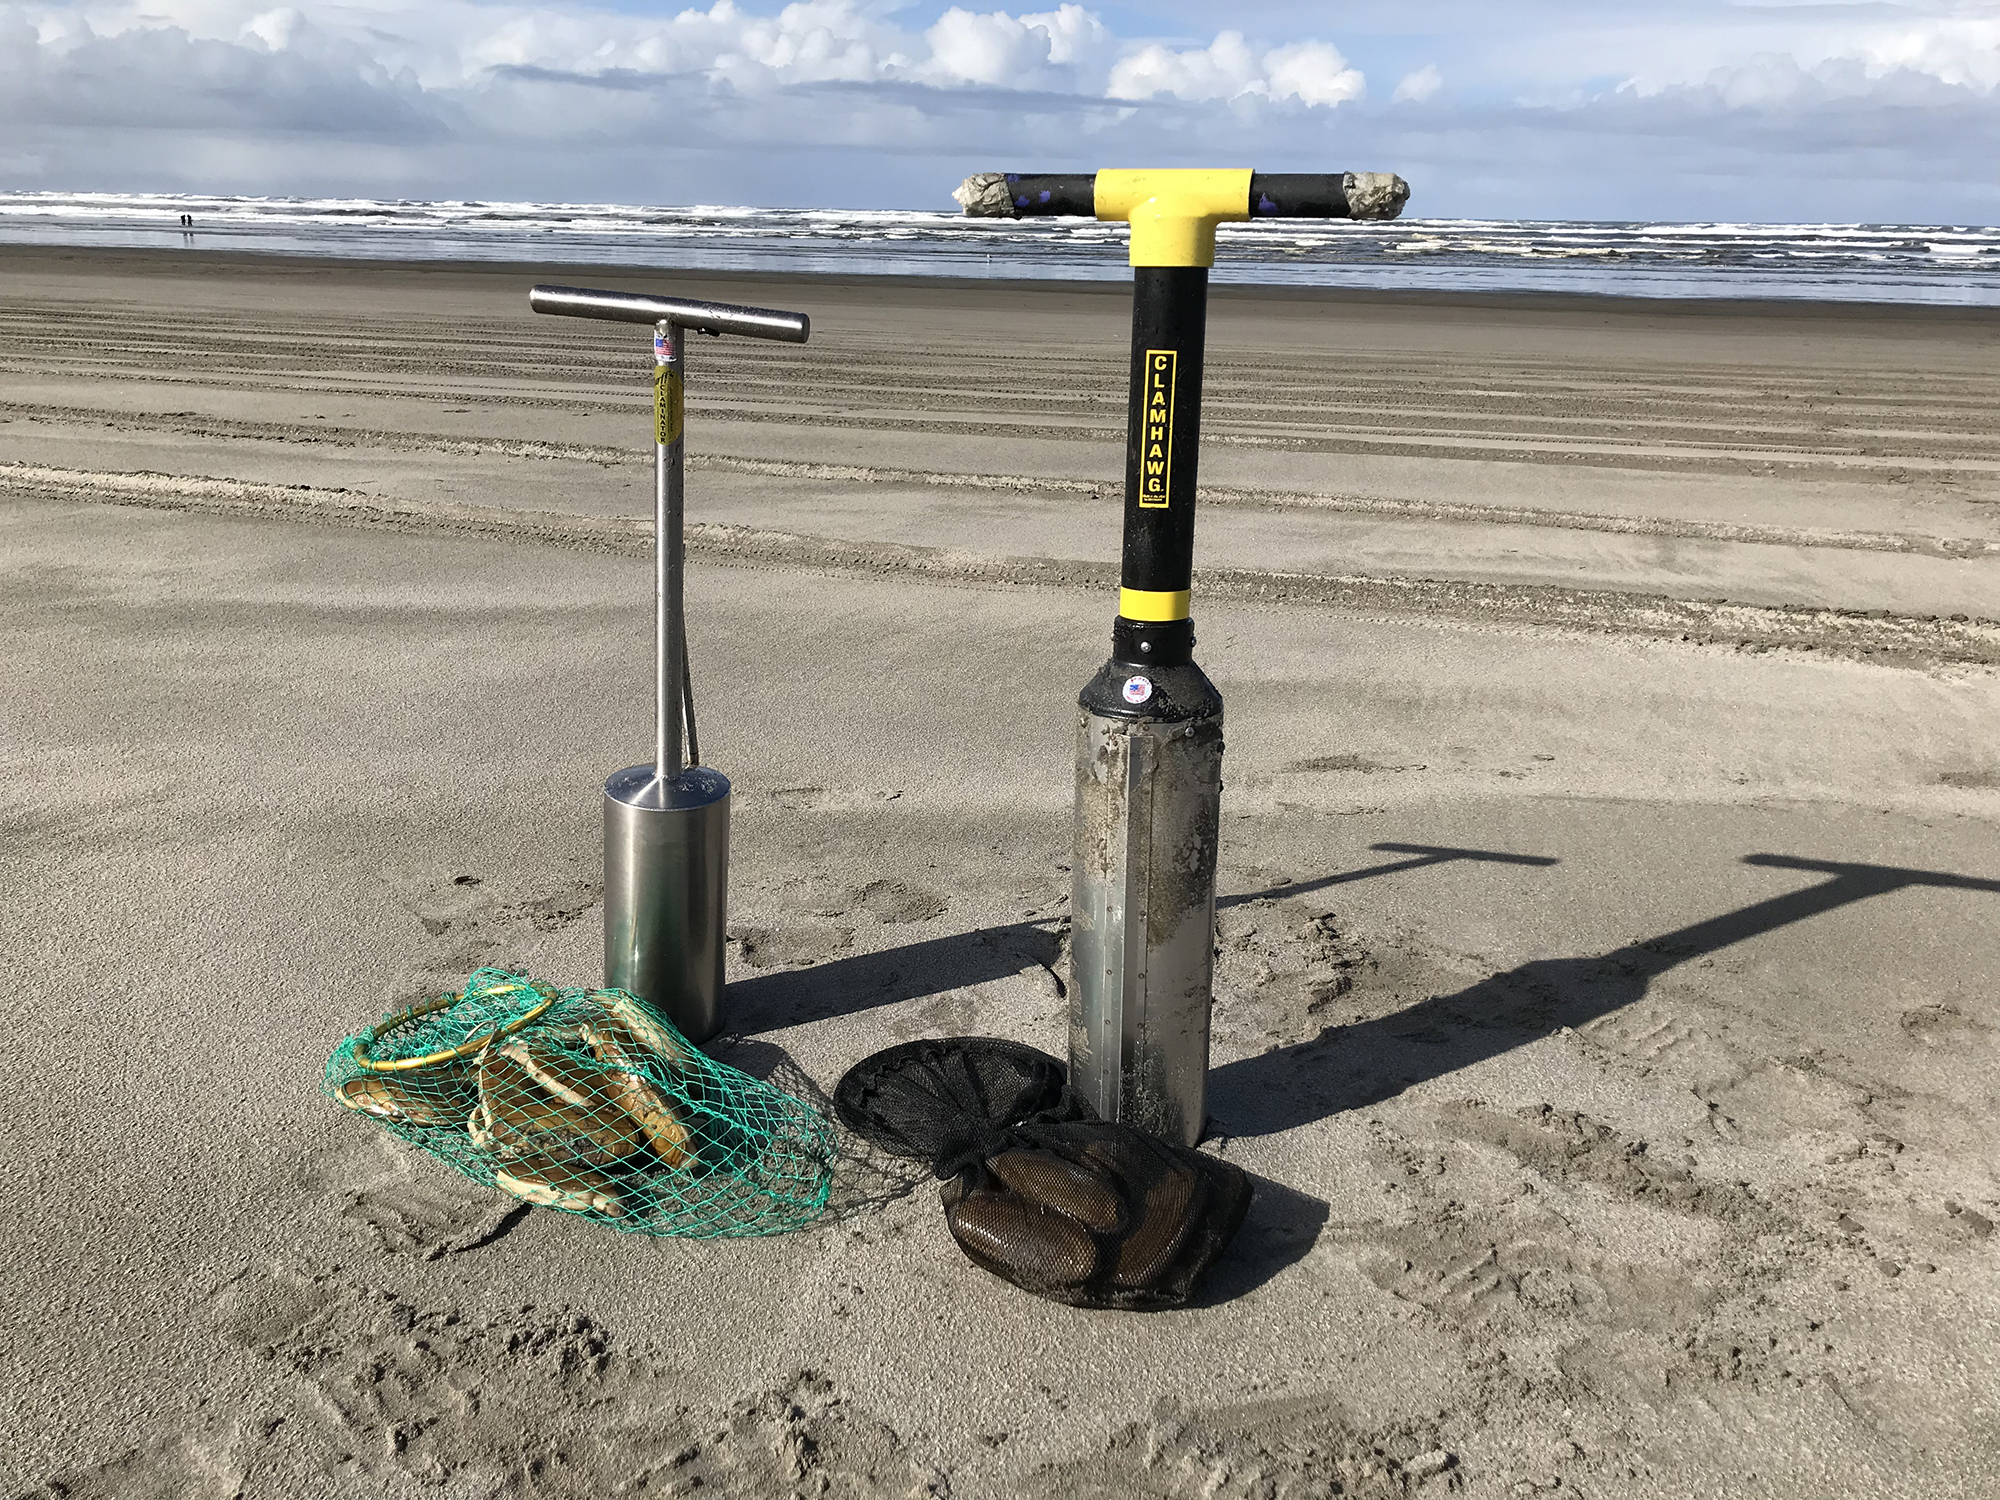 WDFW announces 36 days of tentative coastal razor clam digging